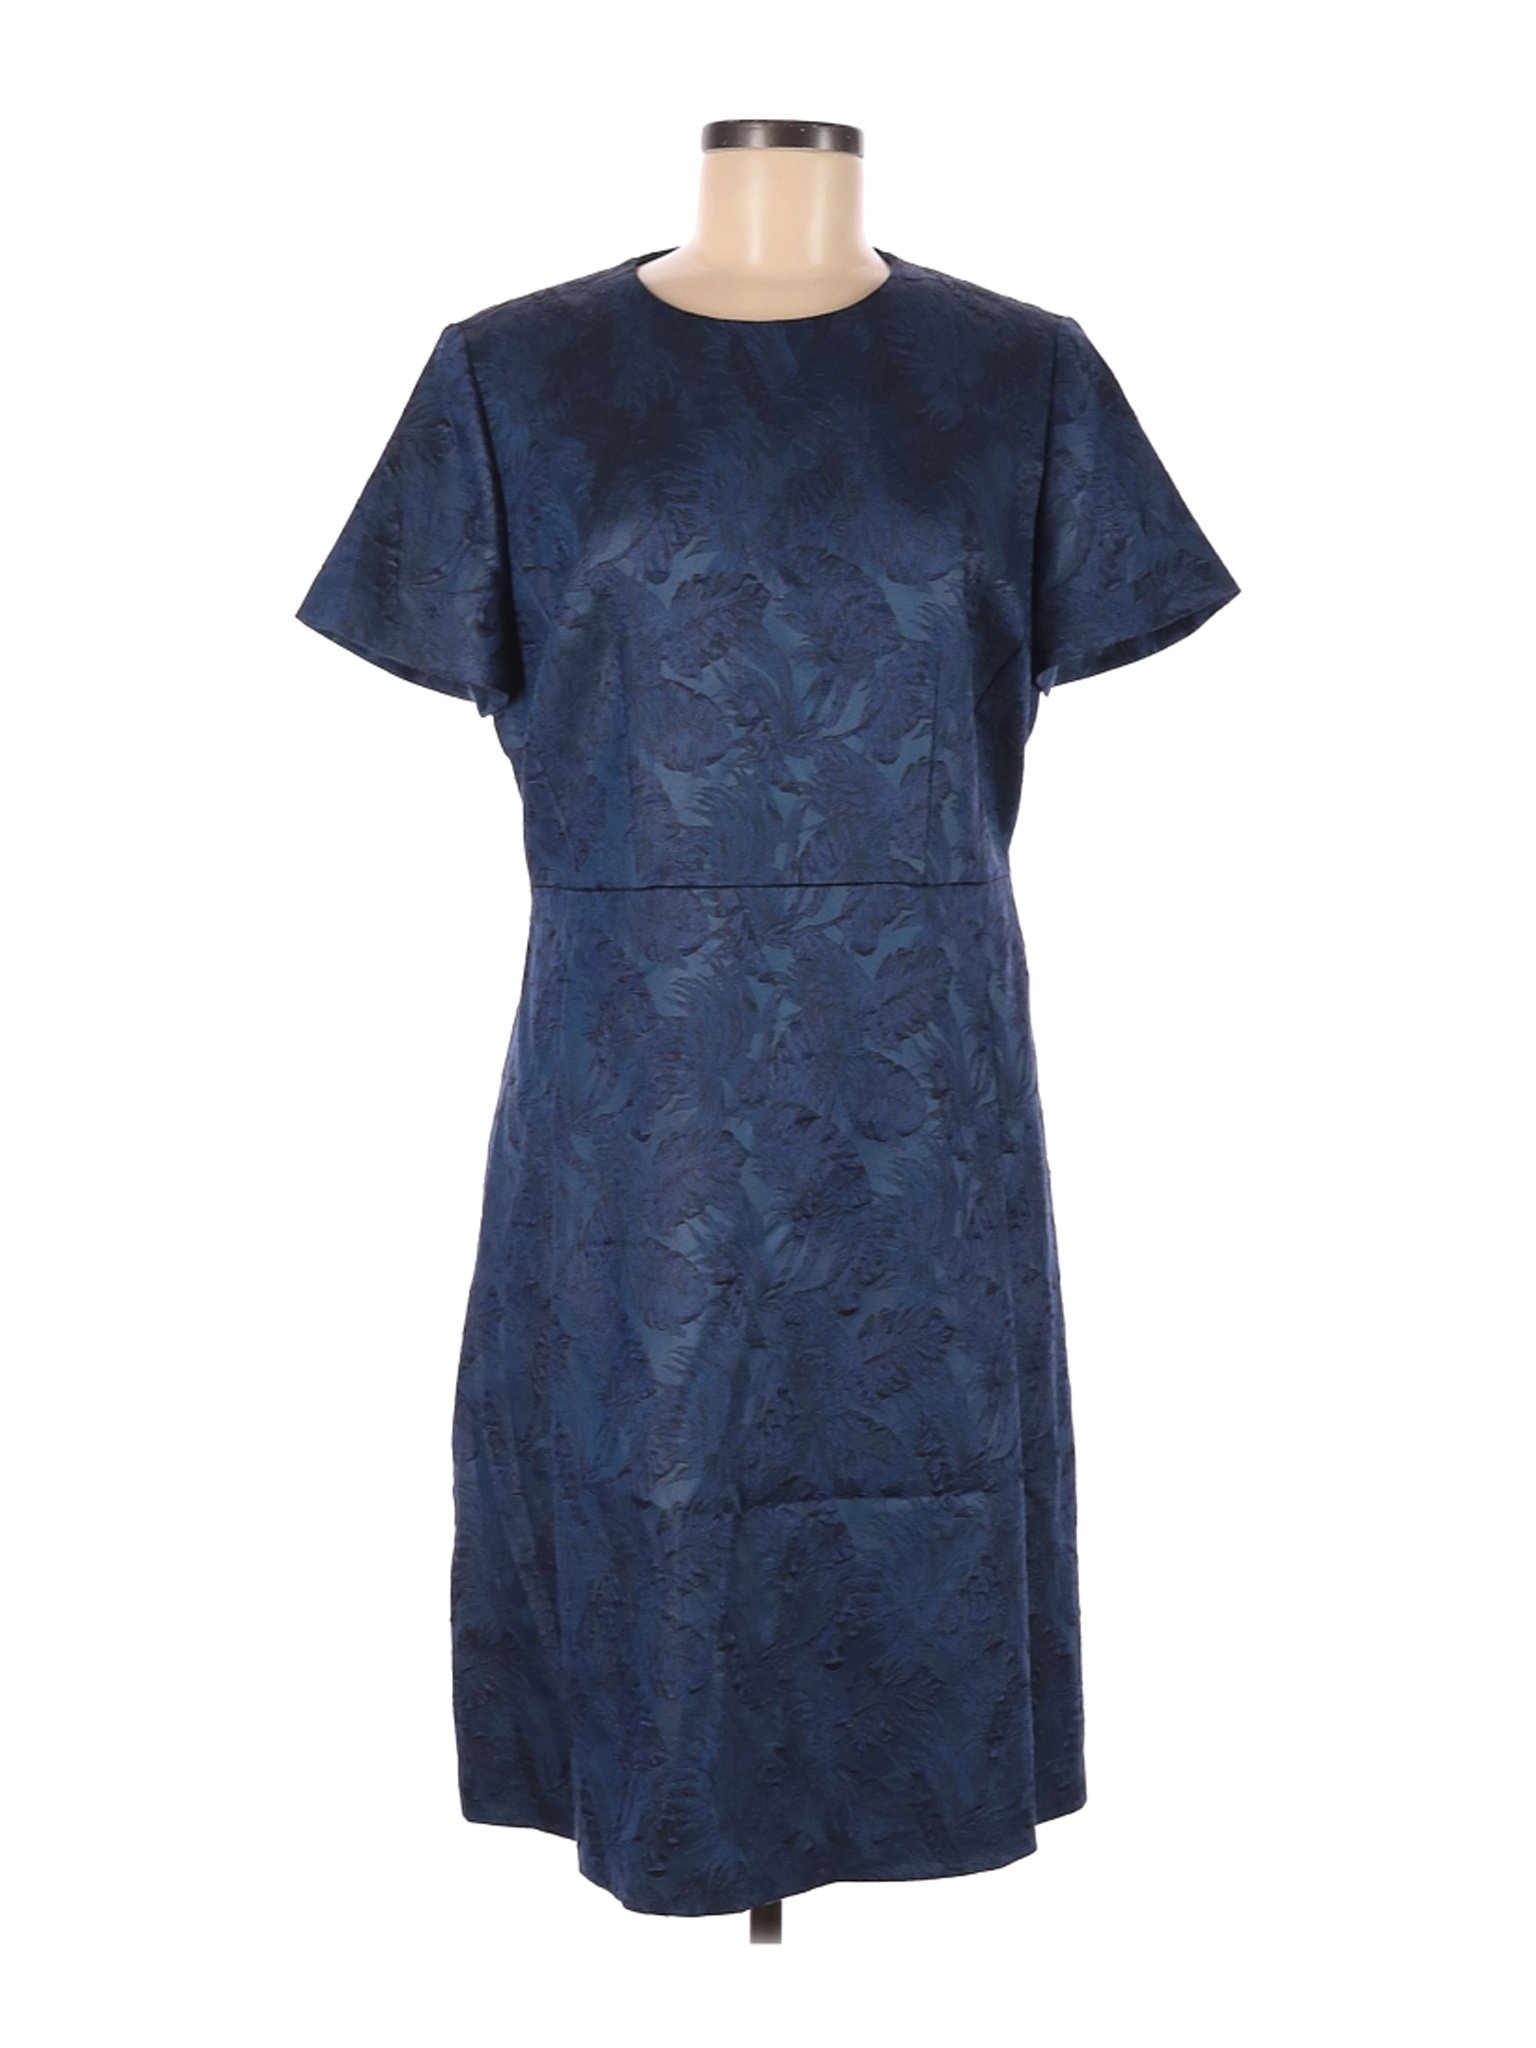 HUGO by HUGO BOSS Women Blue Casual Dress 12 | eBay